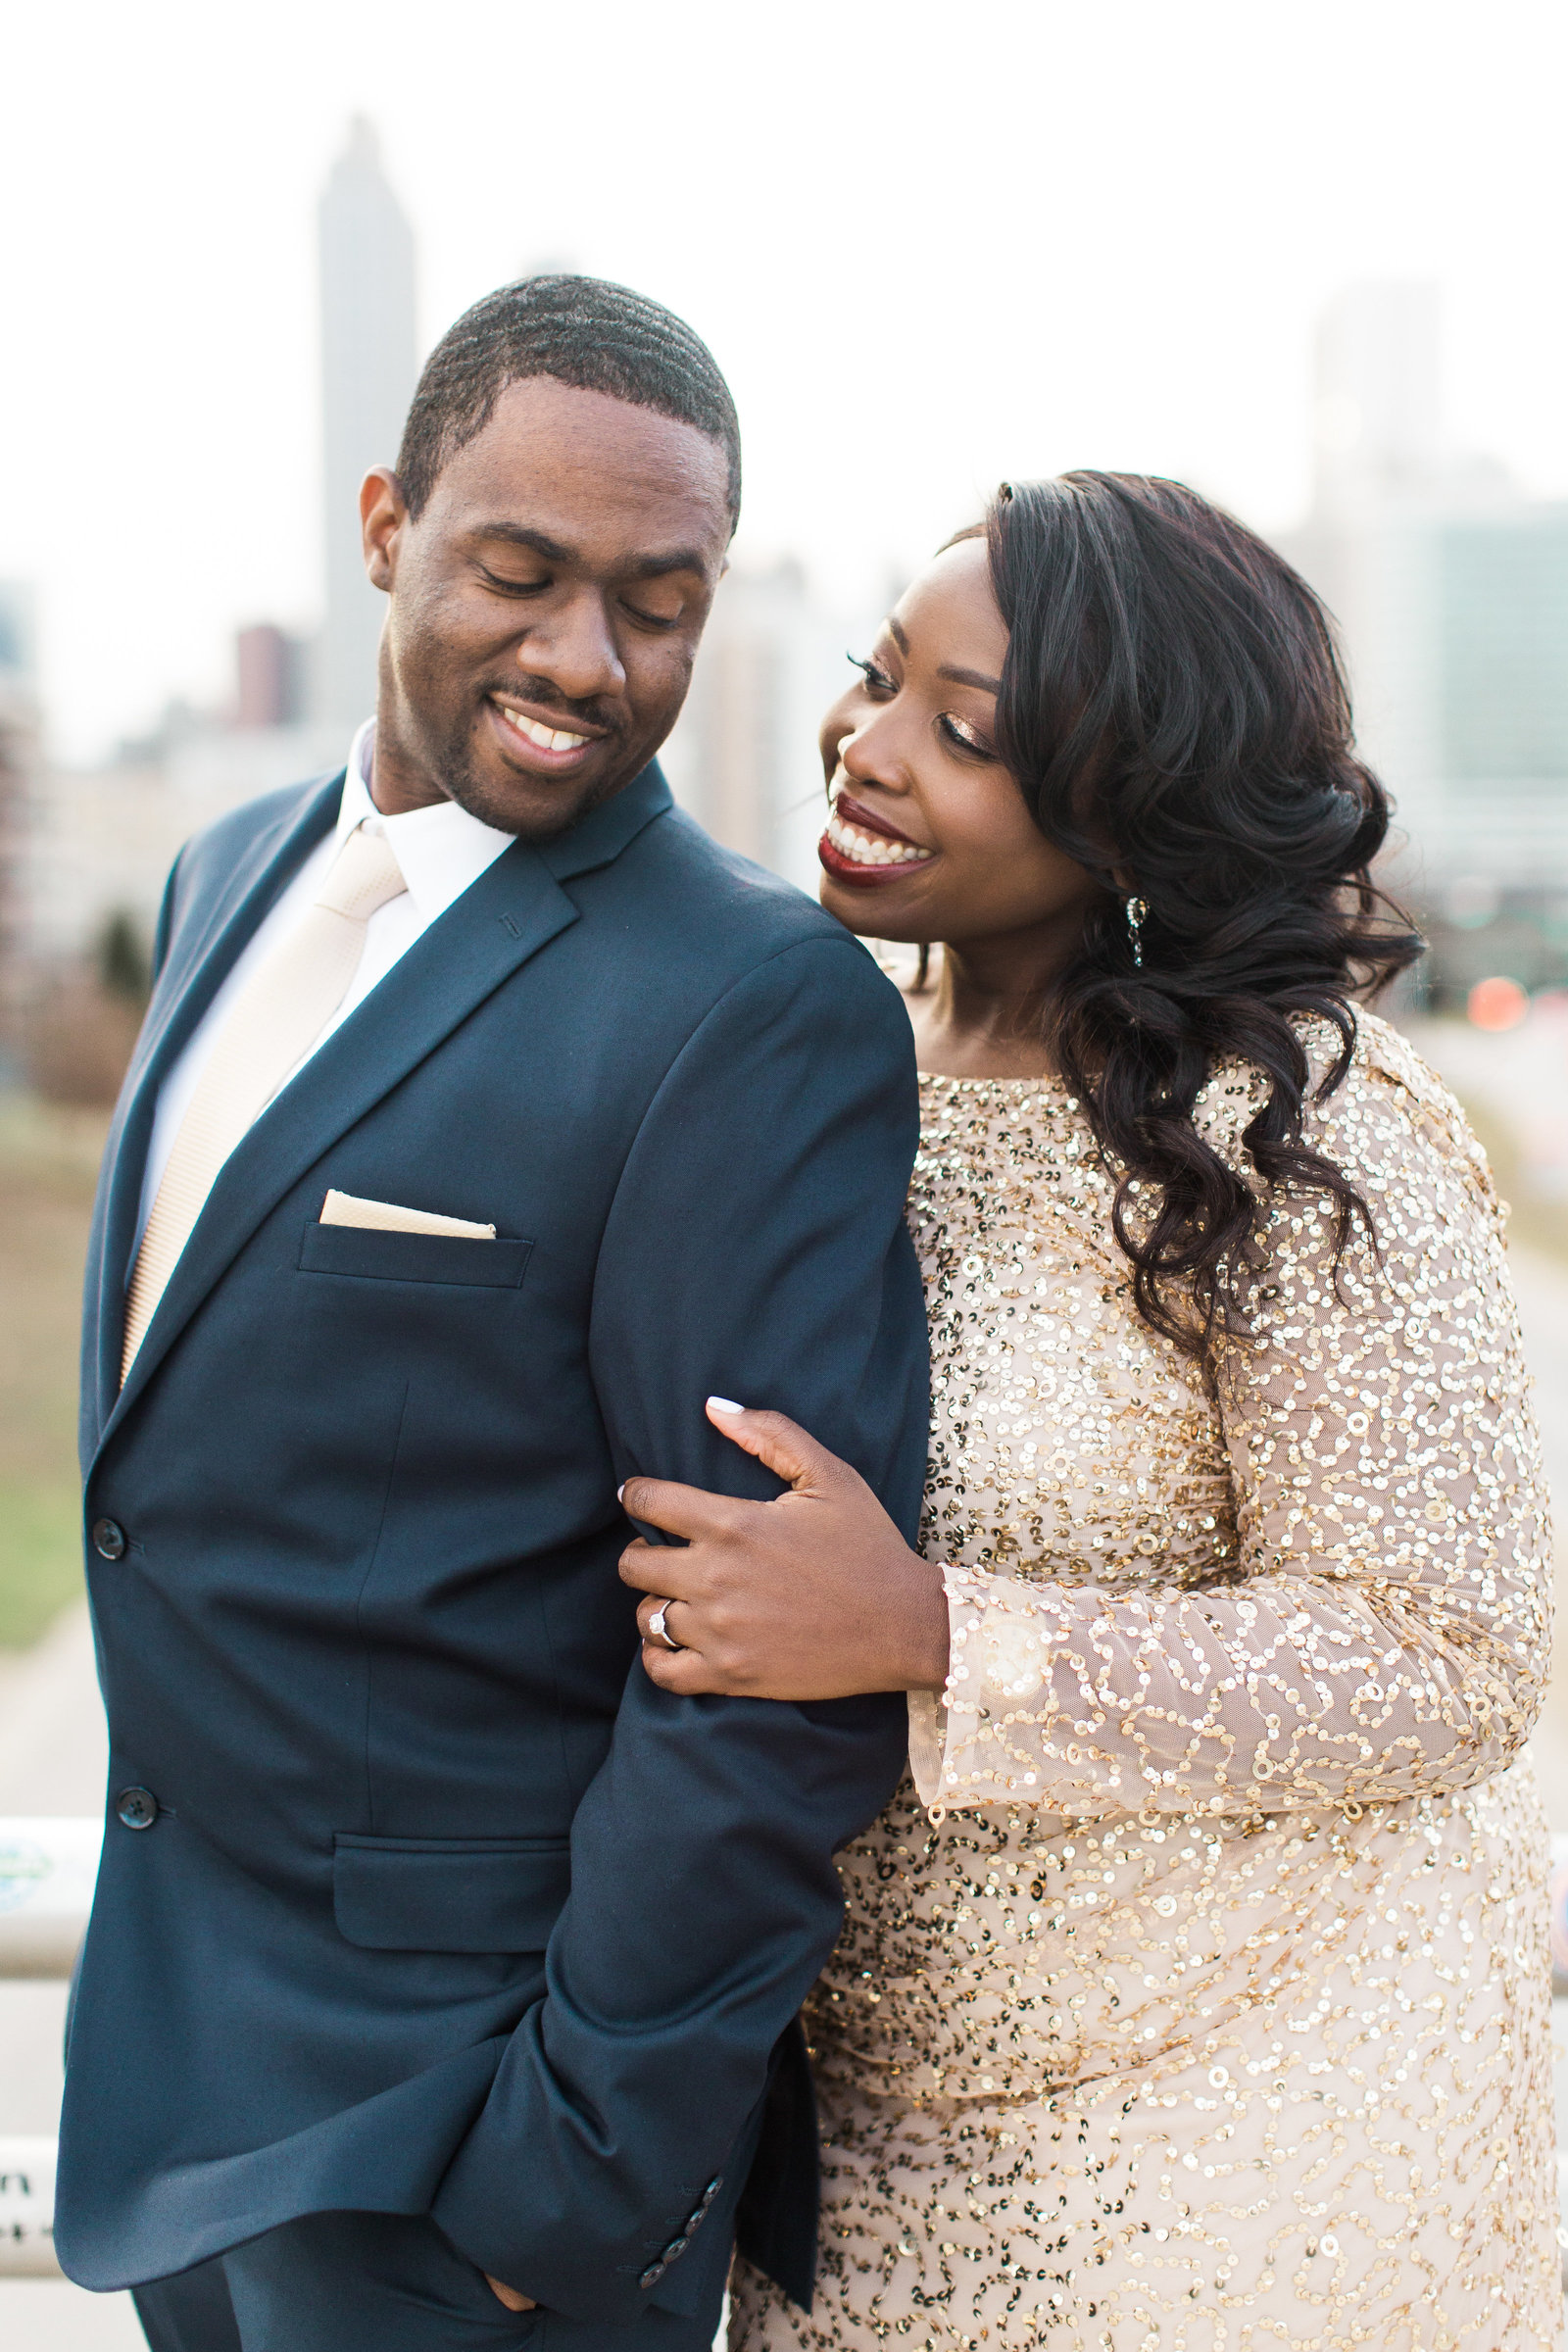 Genuine Wedding Photography for Joyful Couples.